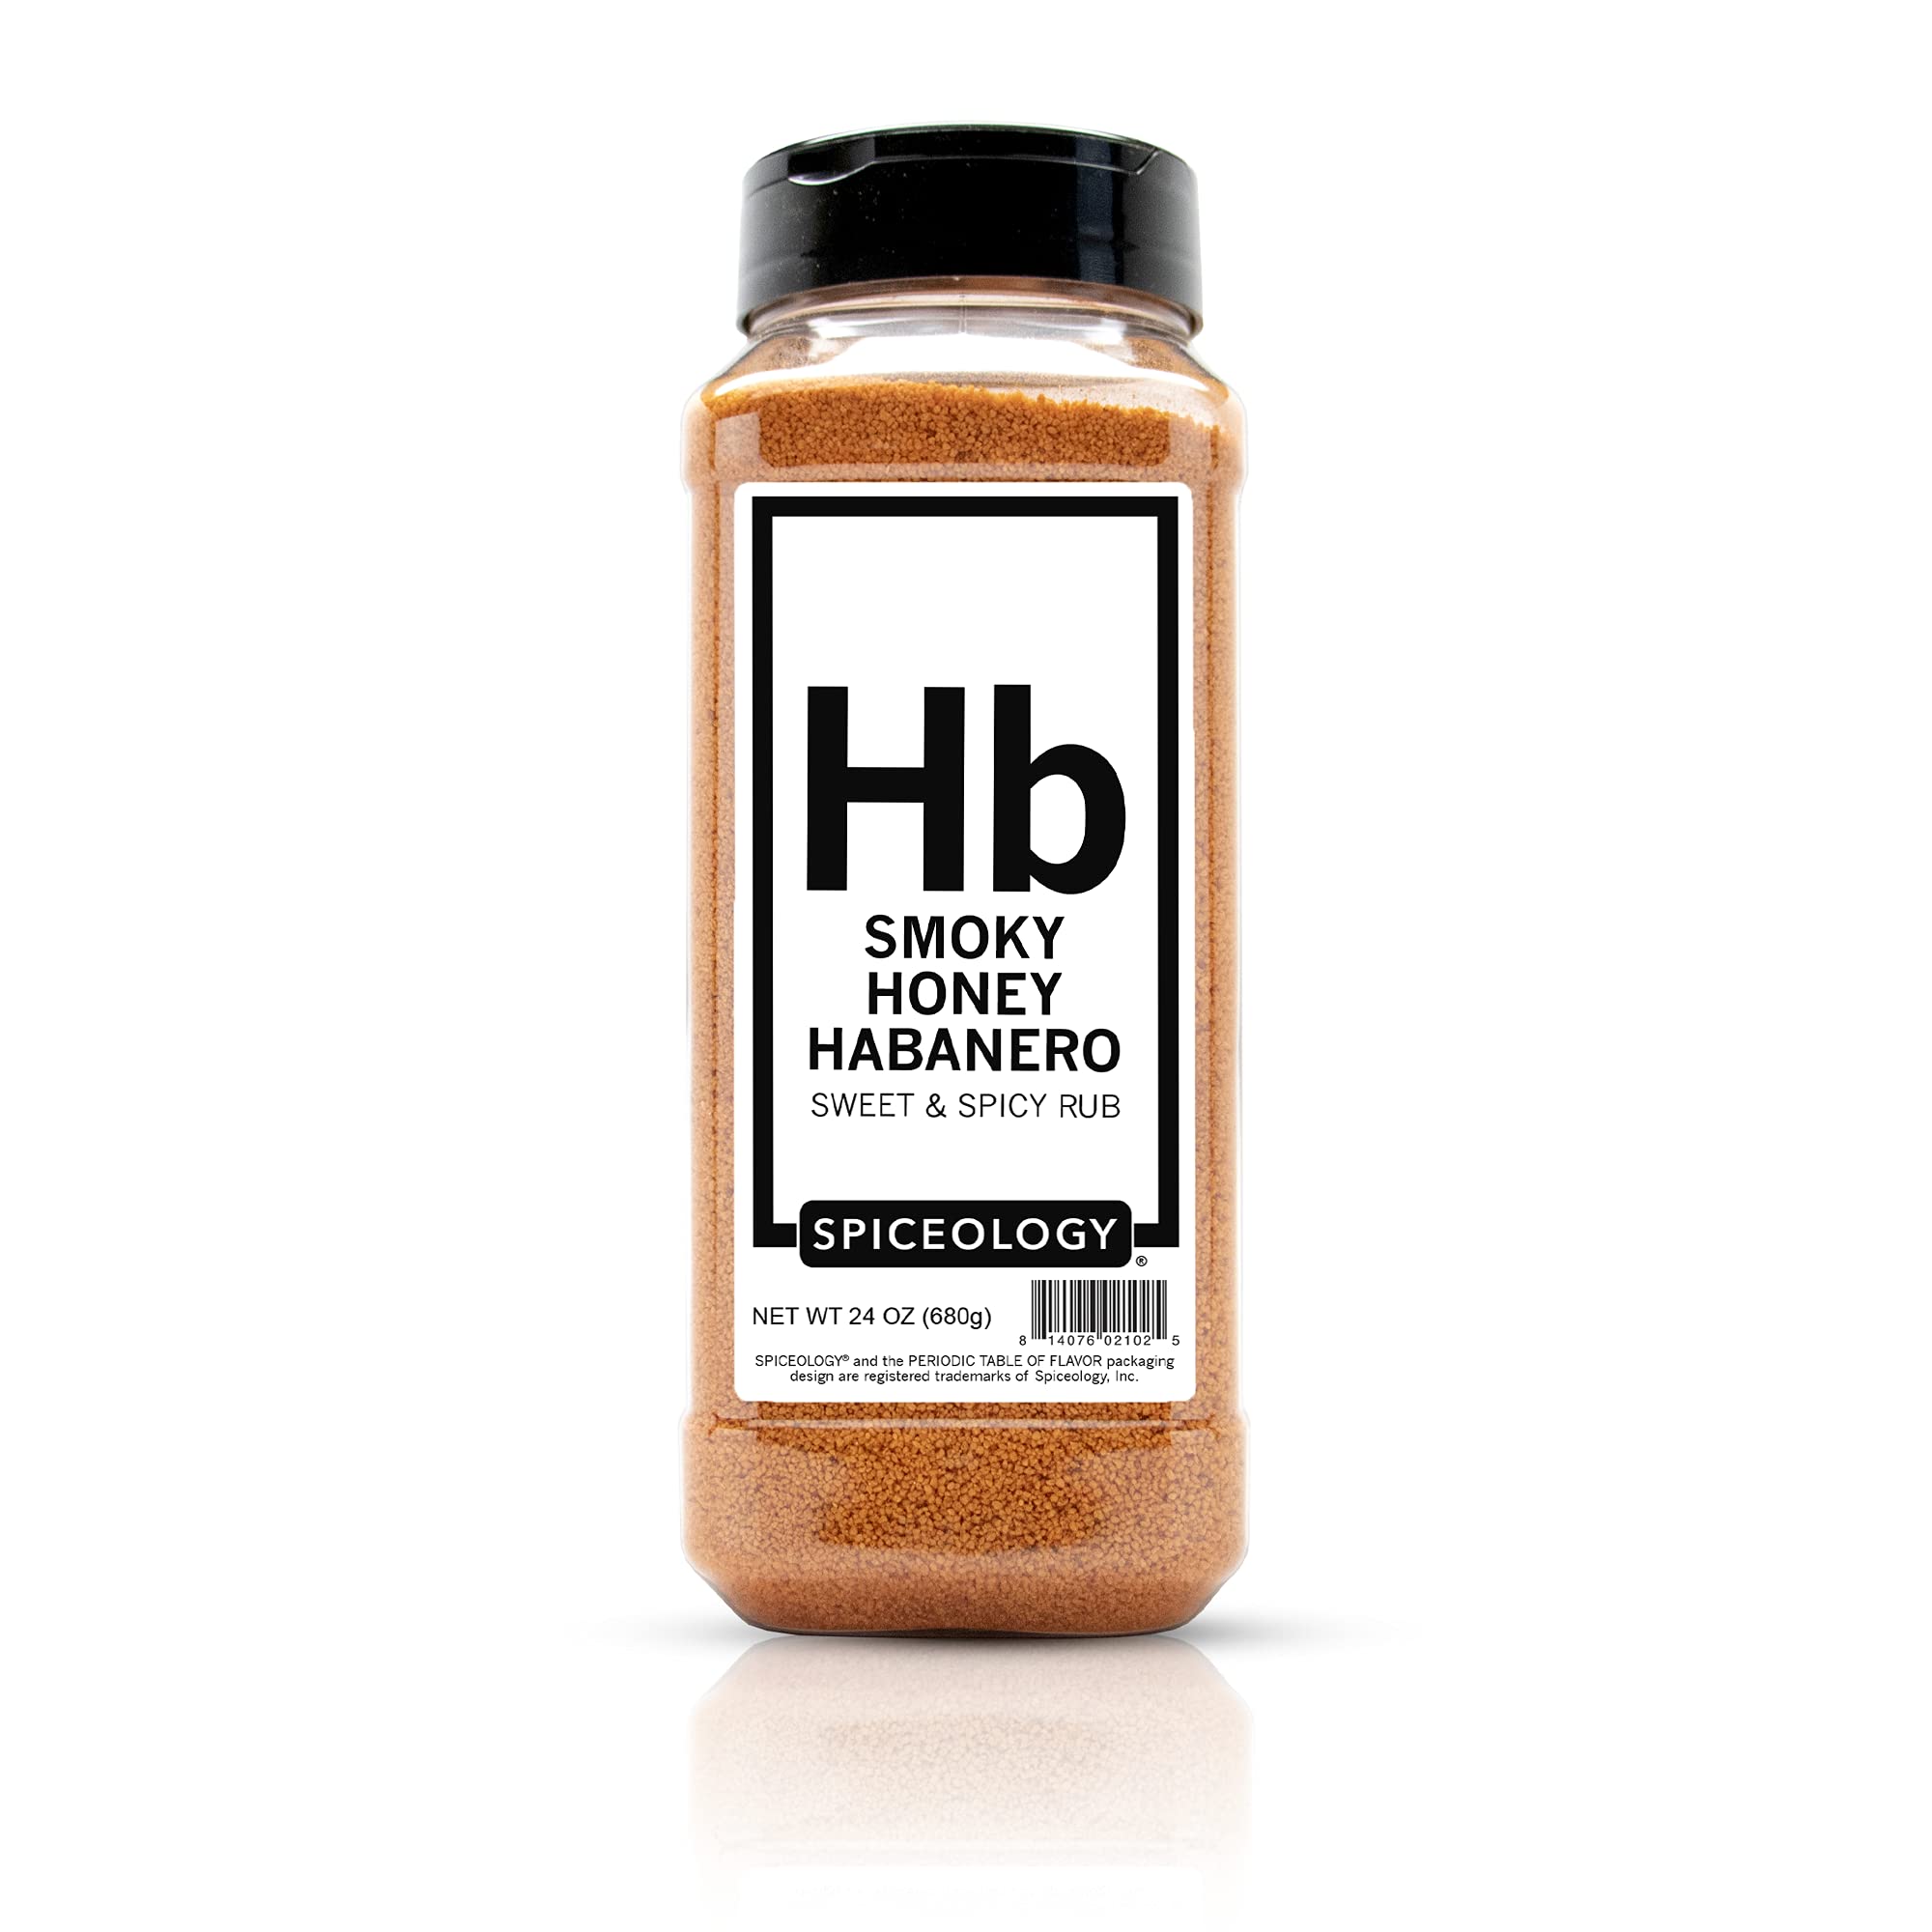 Spiceology Barbecue Spice Rubs 3-Pack Smoky Honey Habanero, Nashville Hot, Black Magic